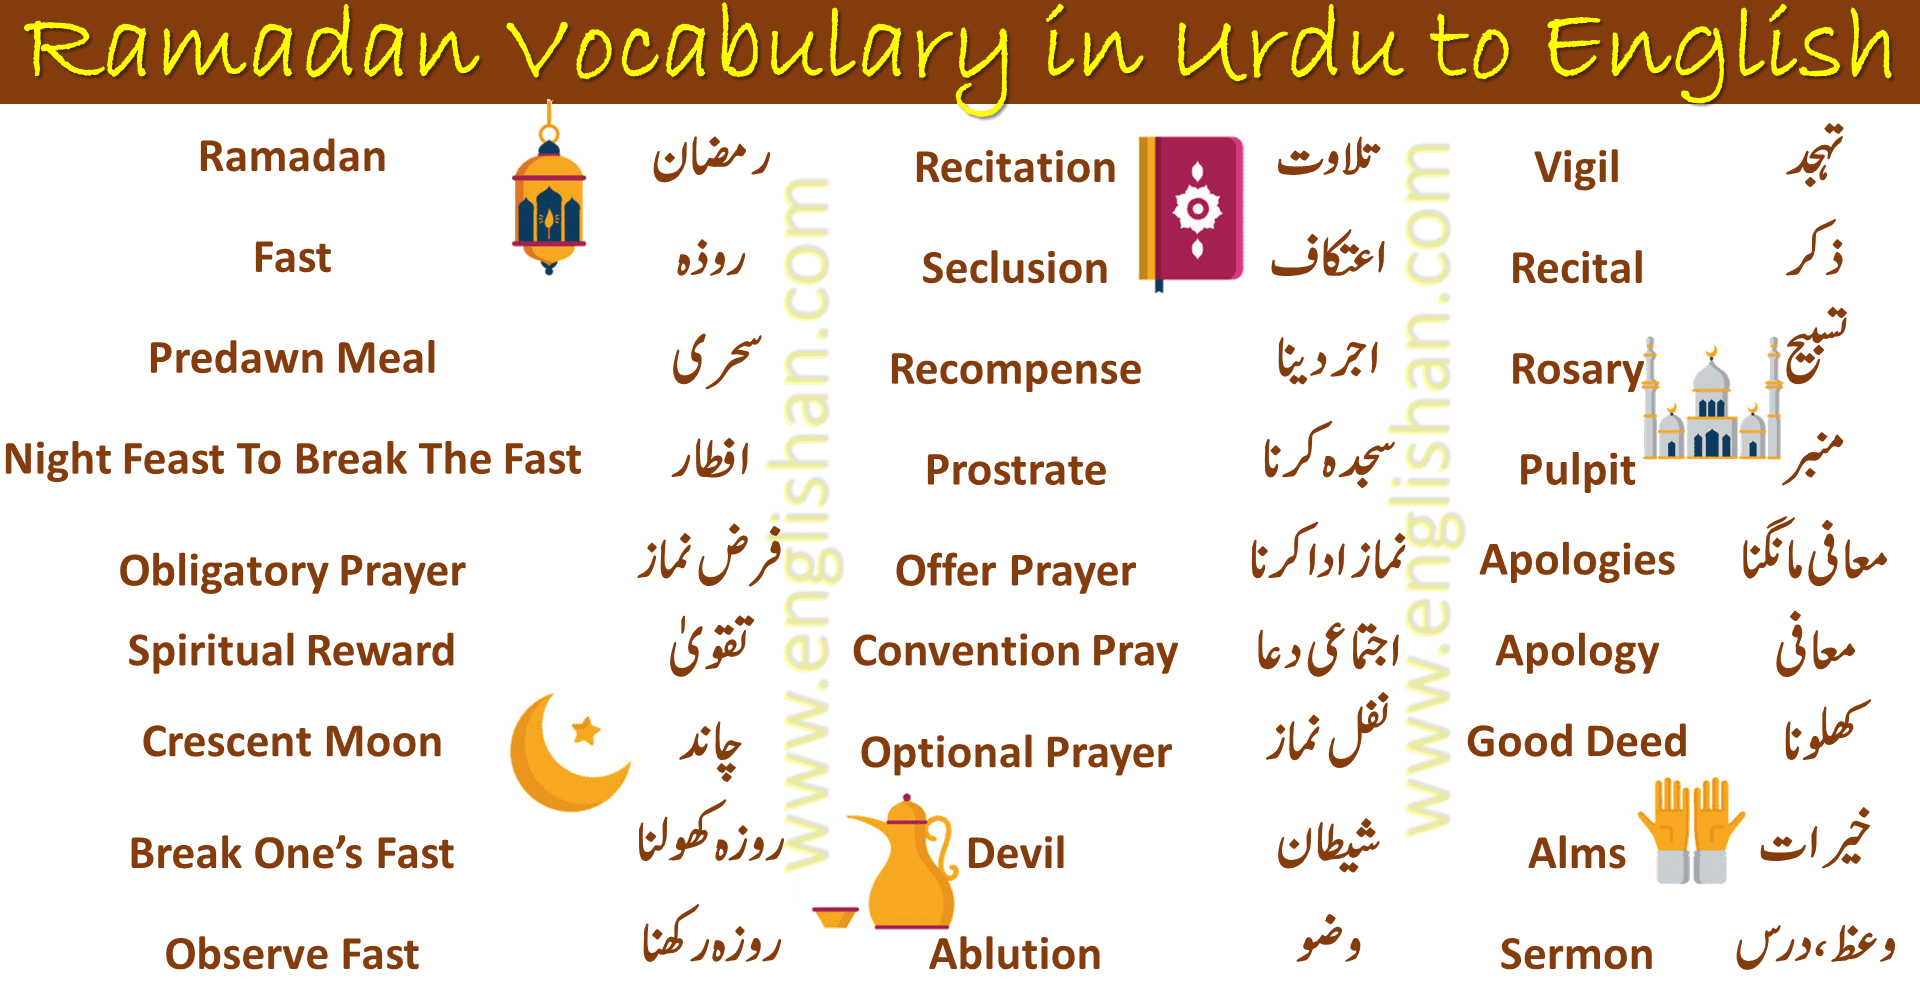 Ramadan Vocabulary in Urdu to English